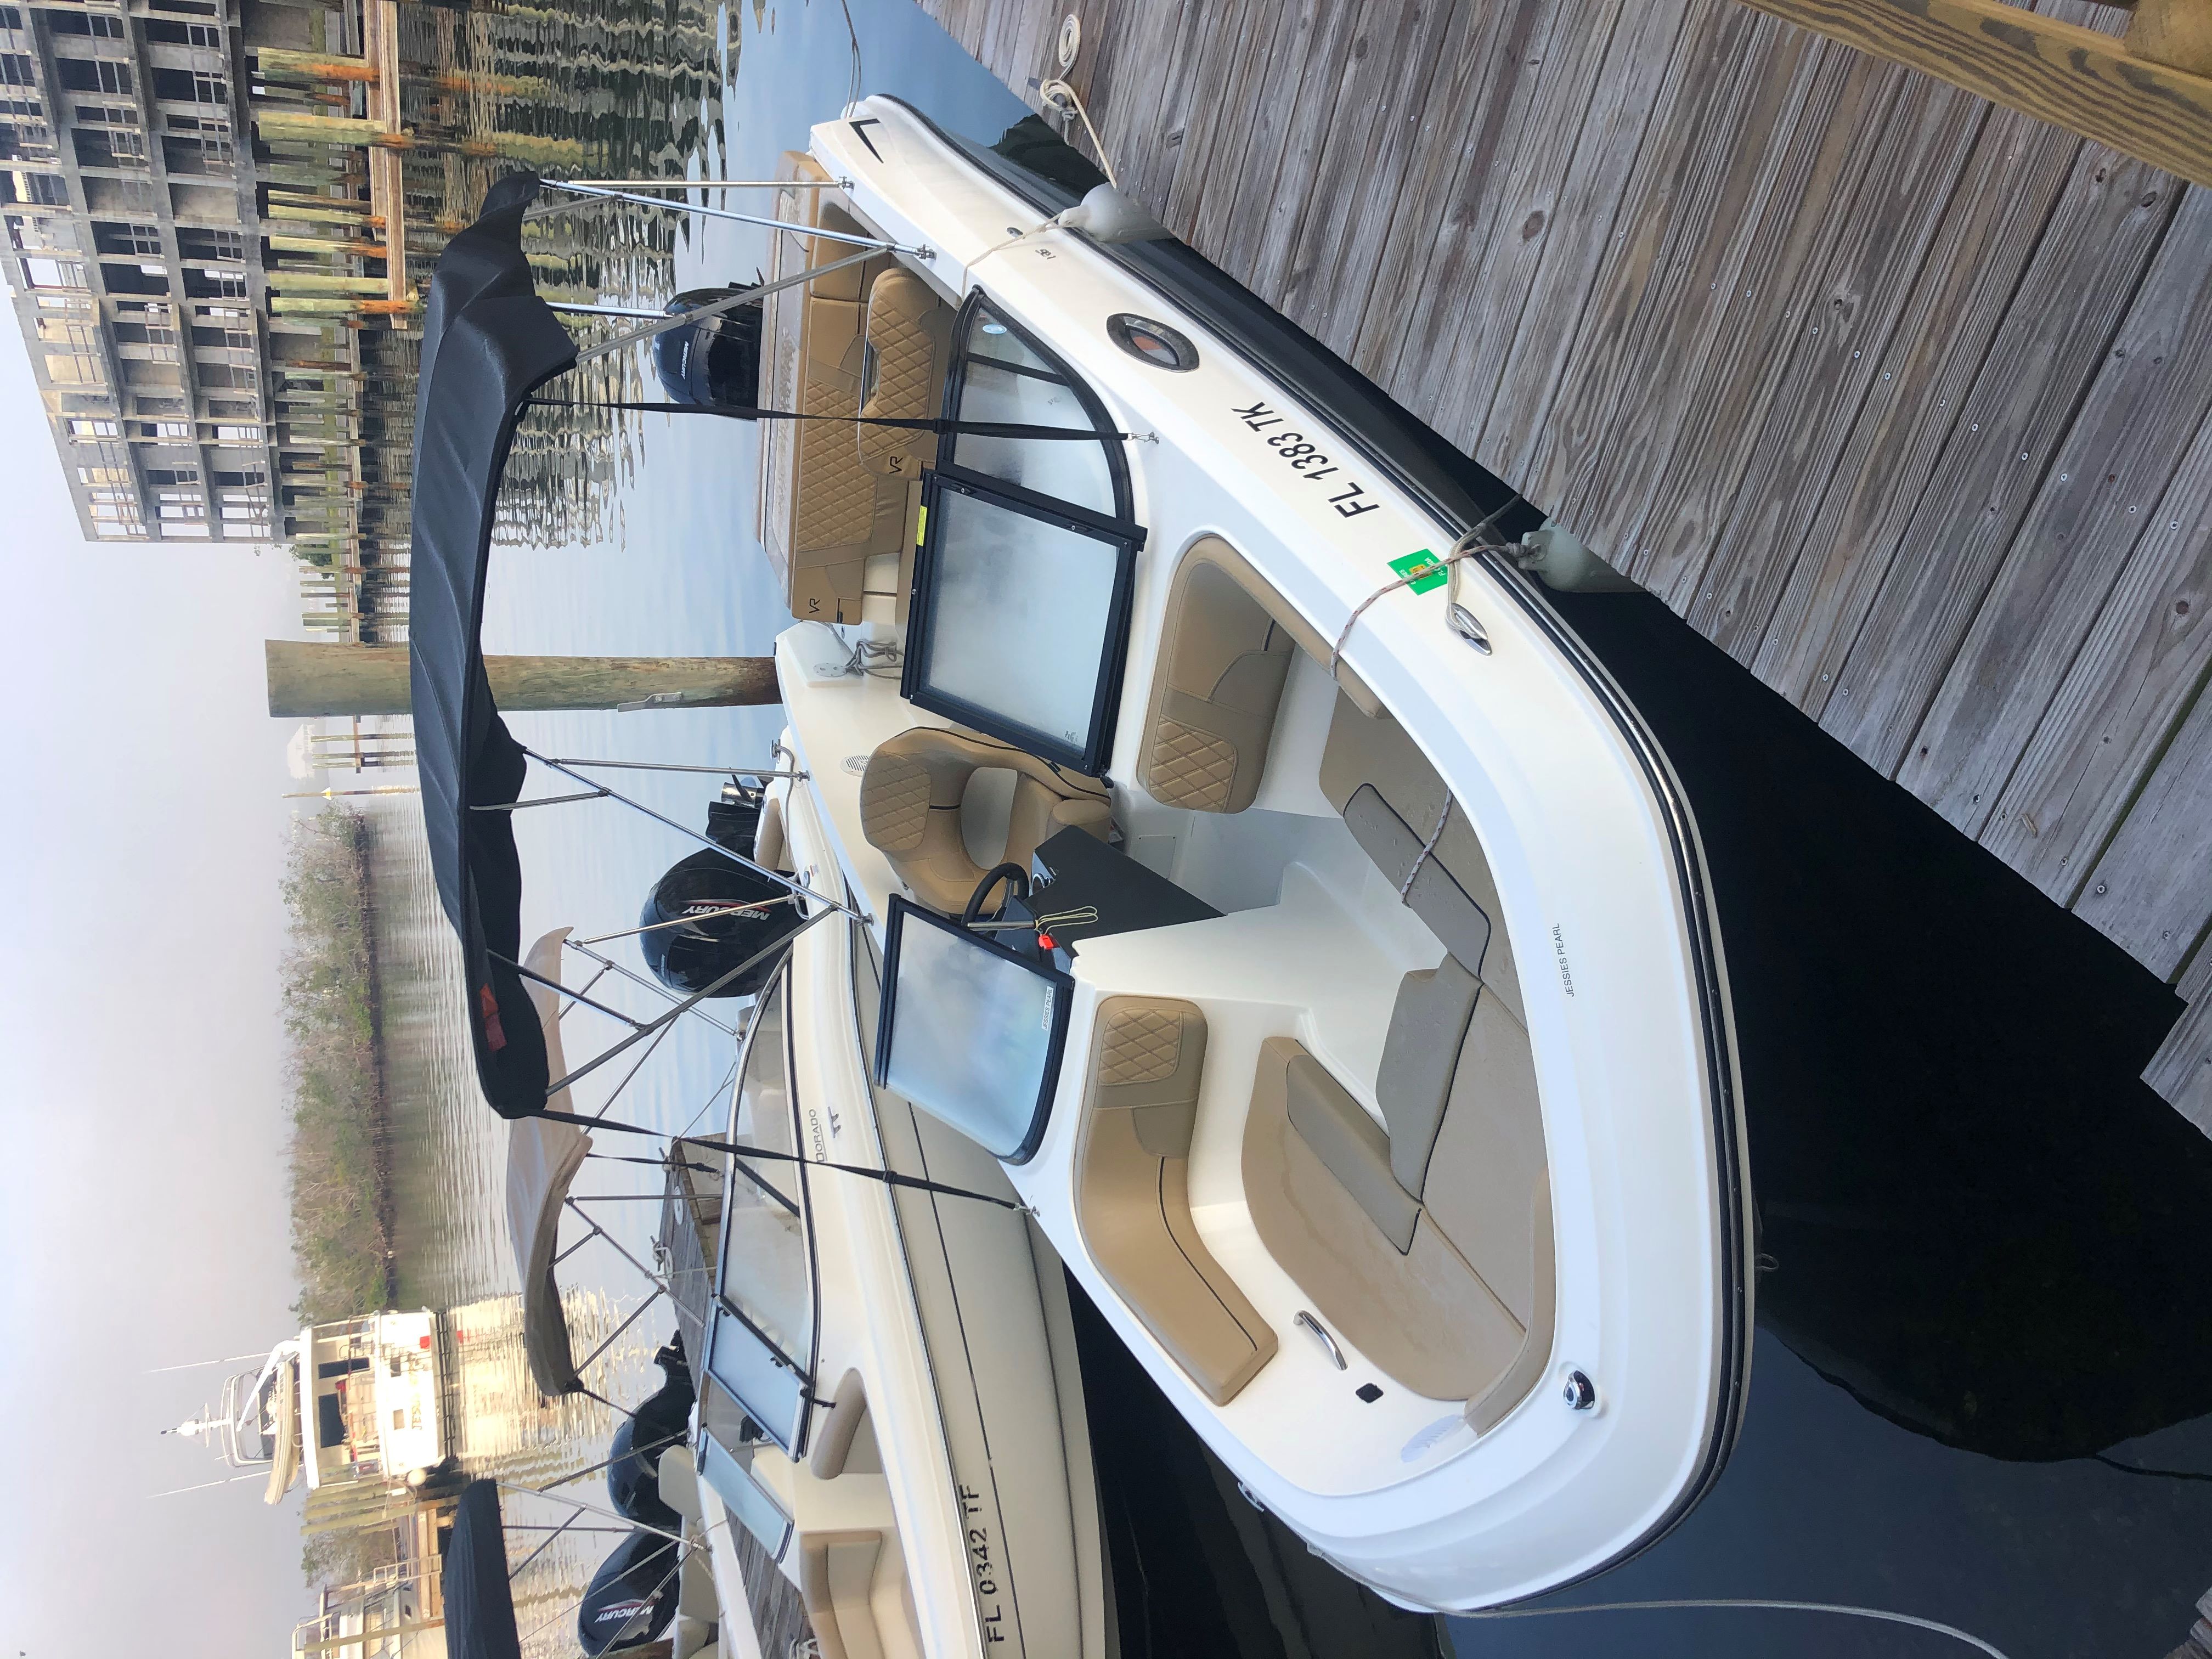 BUOY-WAN KENOBI (Bayliner 22' Deck Boat 150 HP - Cruising)